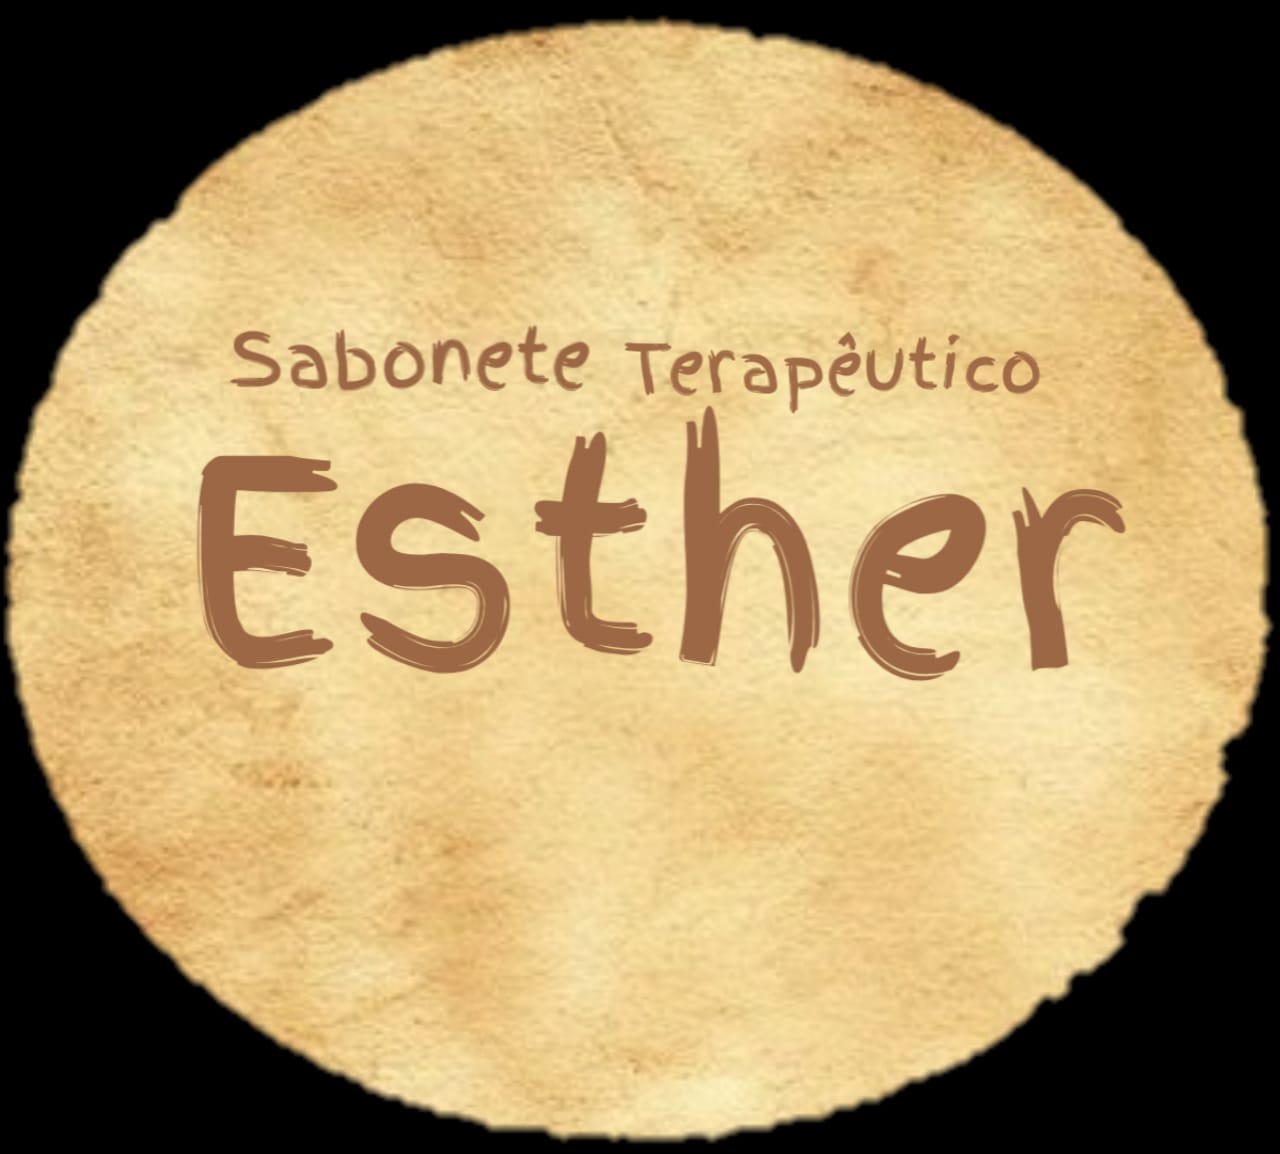 Sabonete Terapêutico Esther